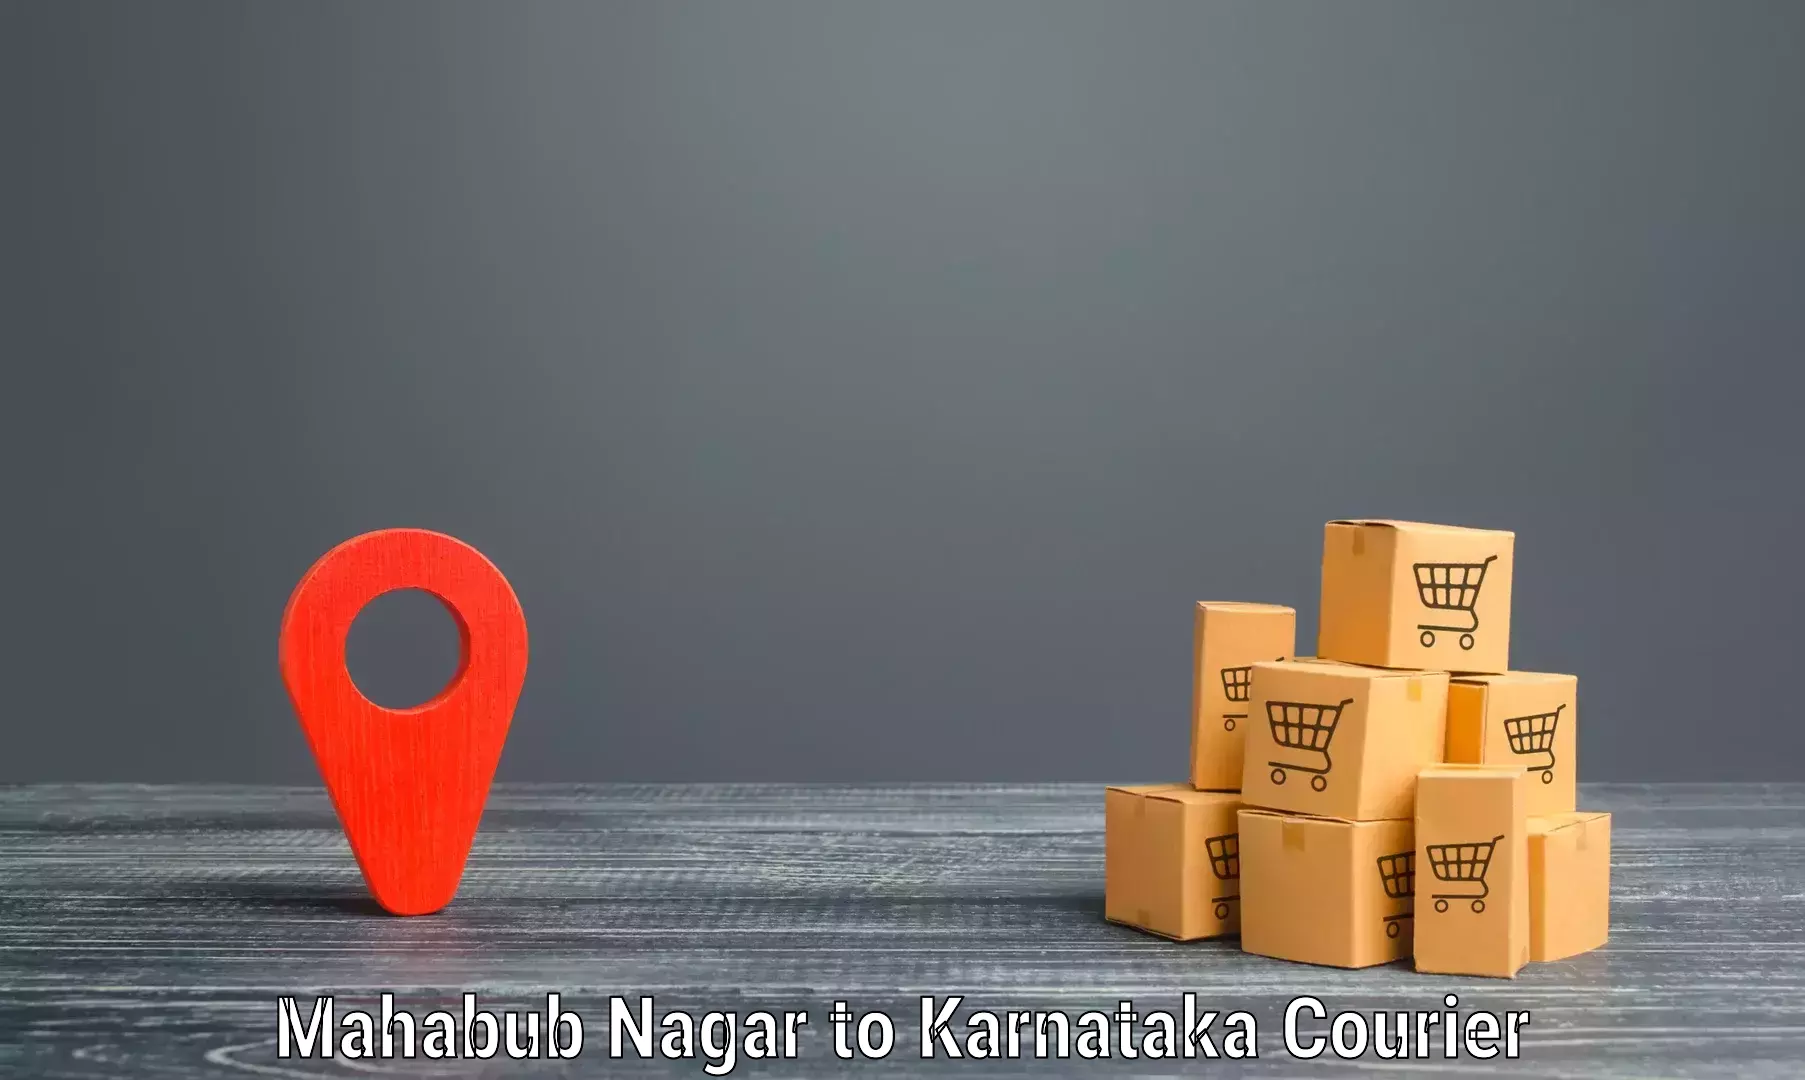 Courier service innovation Mahabub Nagar to Badami